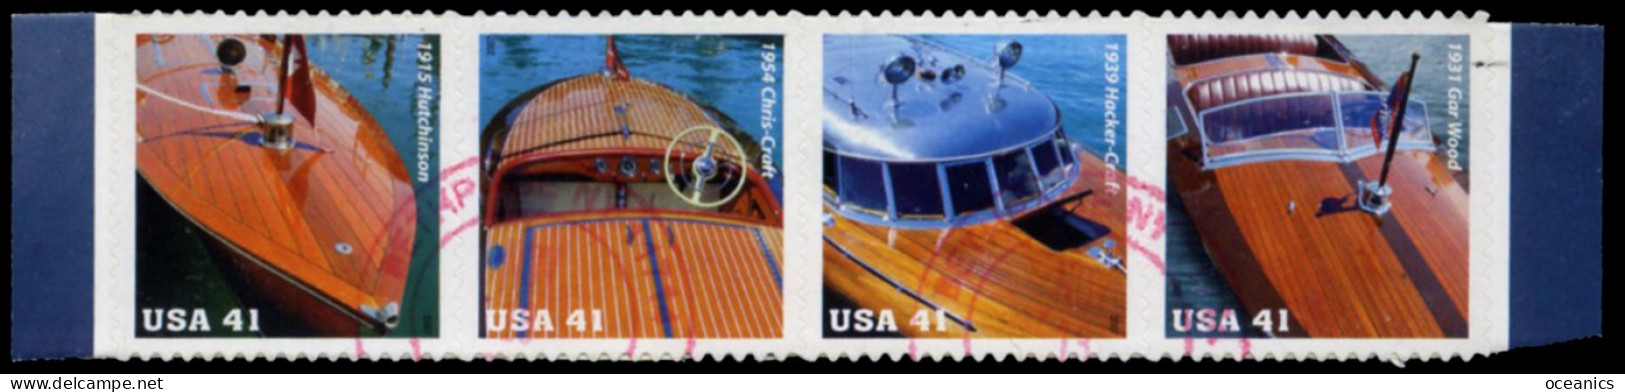 Etats-Unis / United States (Scott No.4163a - Vintage Mahogany Speedboats) (o) Use Strip Of 4 - Oblitérés